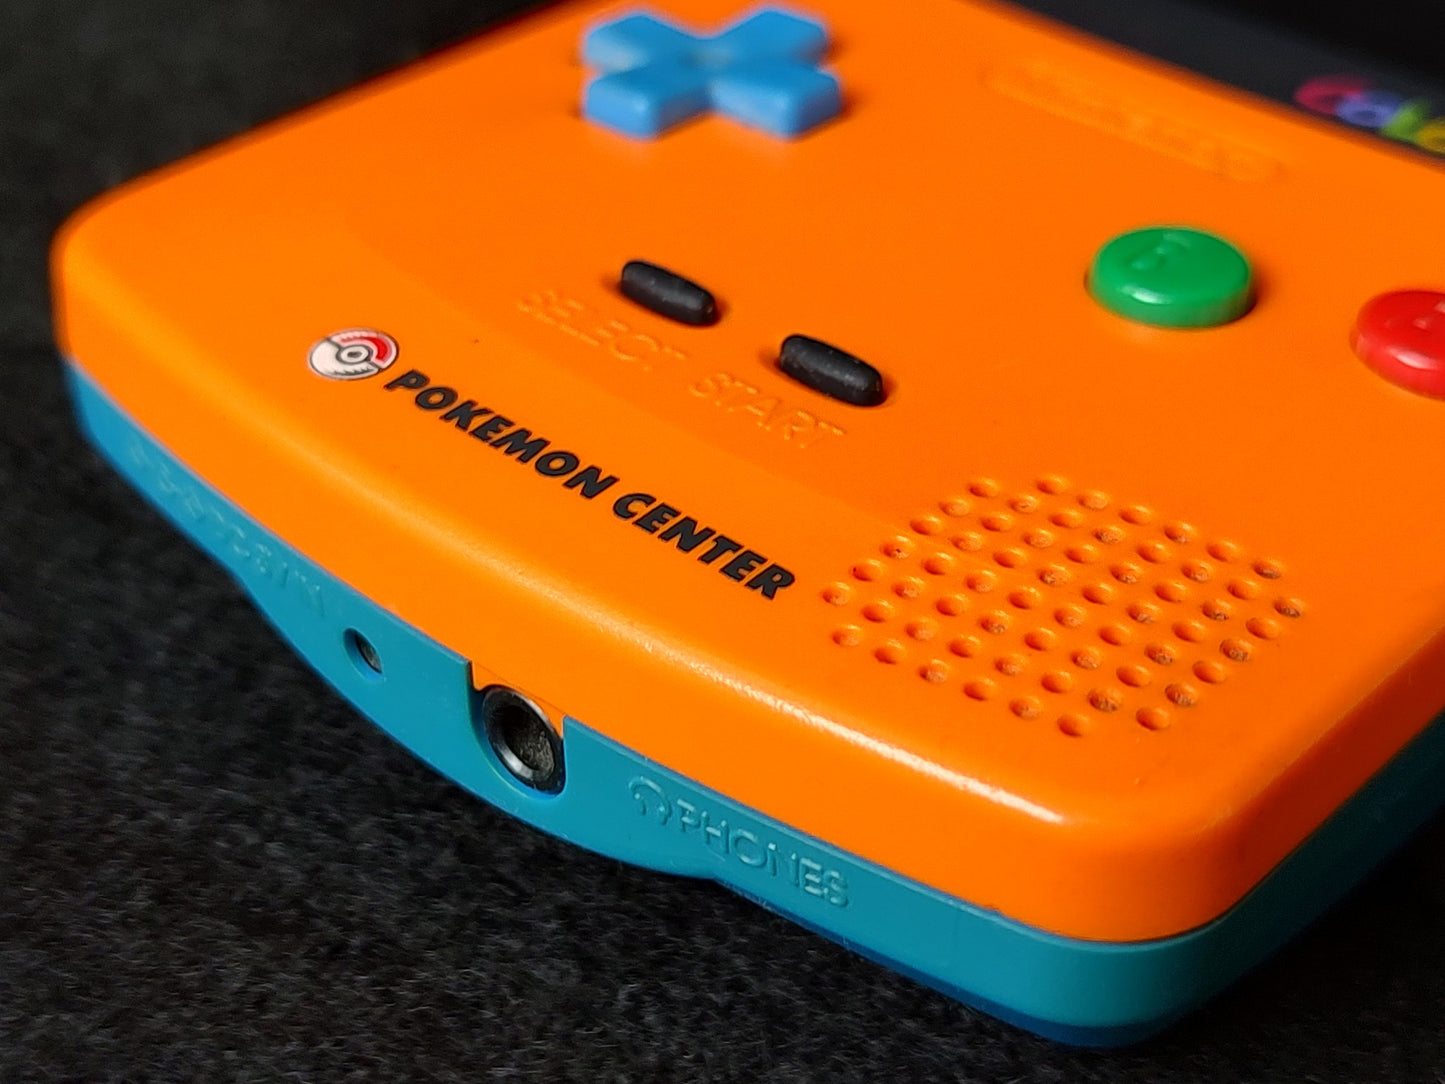 Nintendo Gameboy Color Pokemon Limited edition Orange color console -g0321-